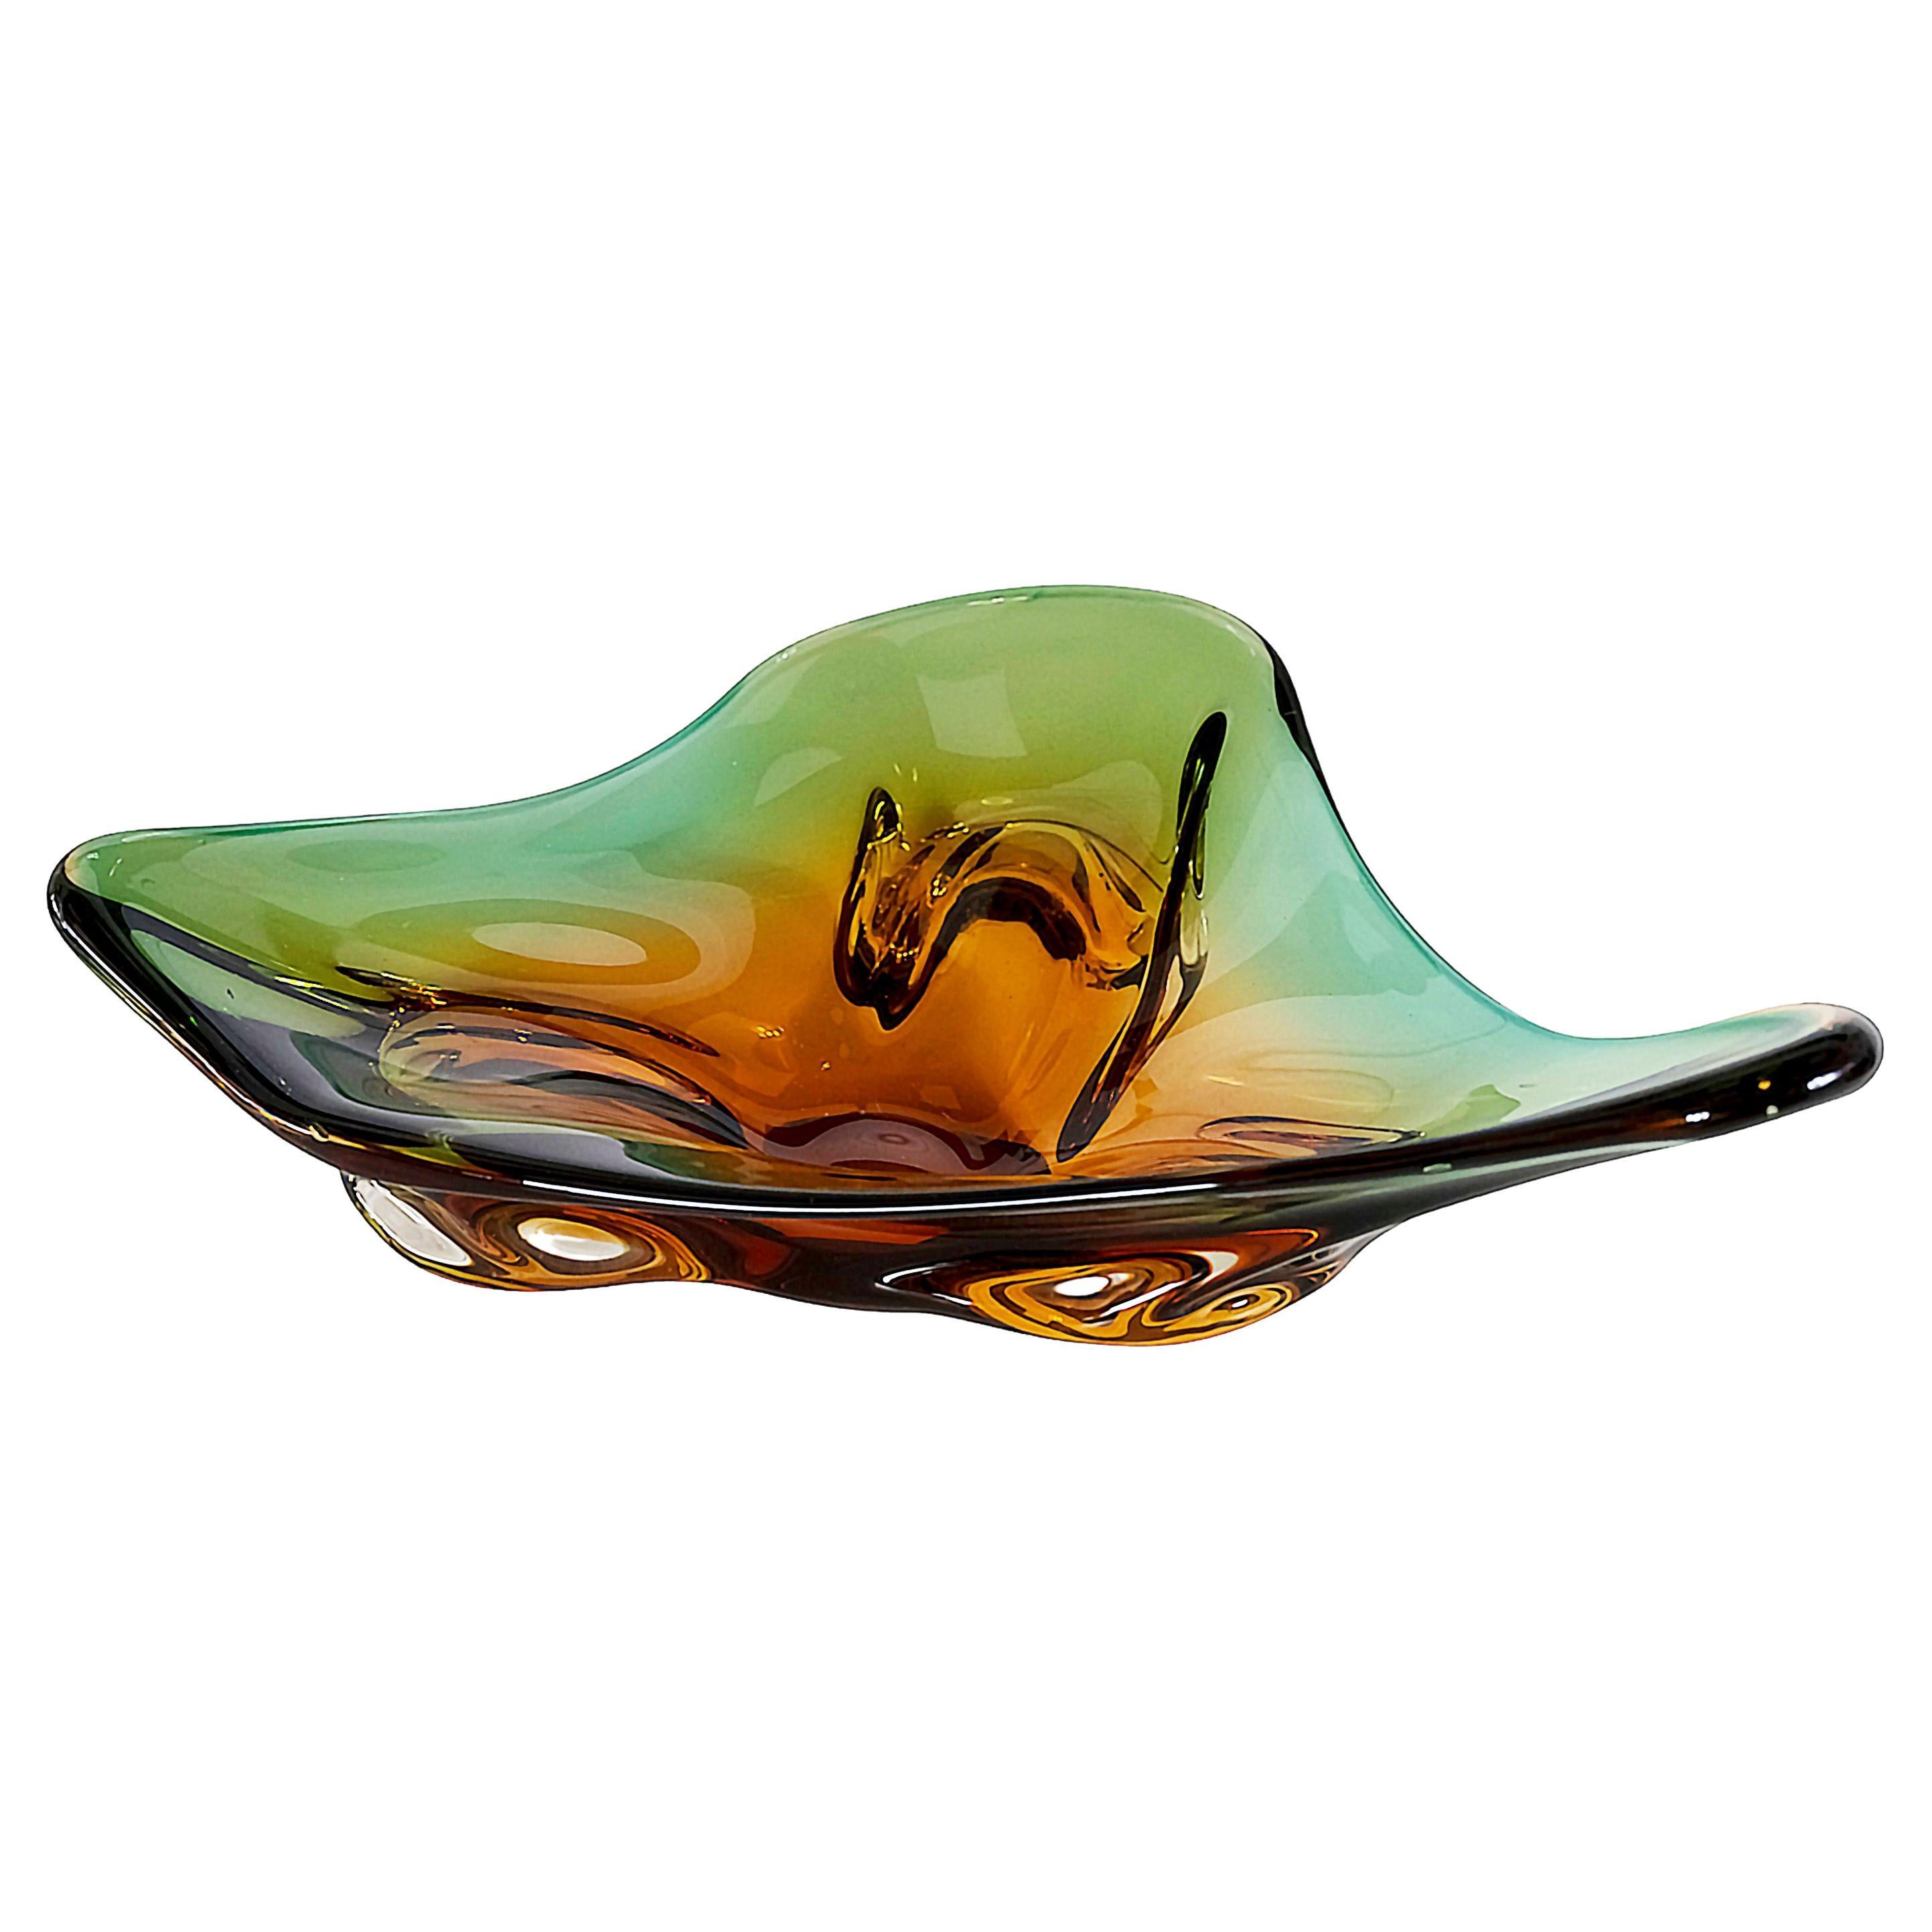 Vase / centre de table italien vintage en verre de Murano fabriqué à la main en vente